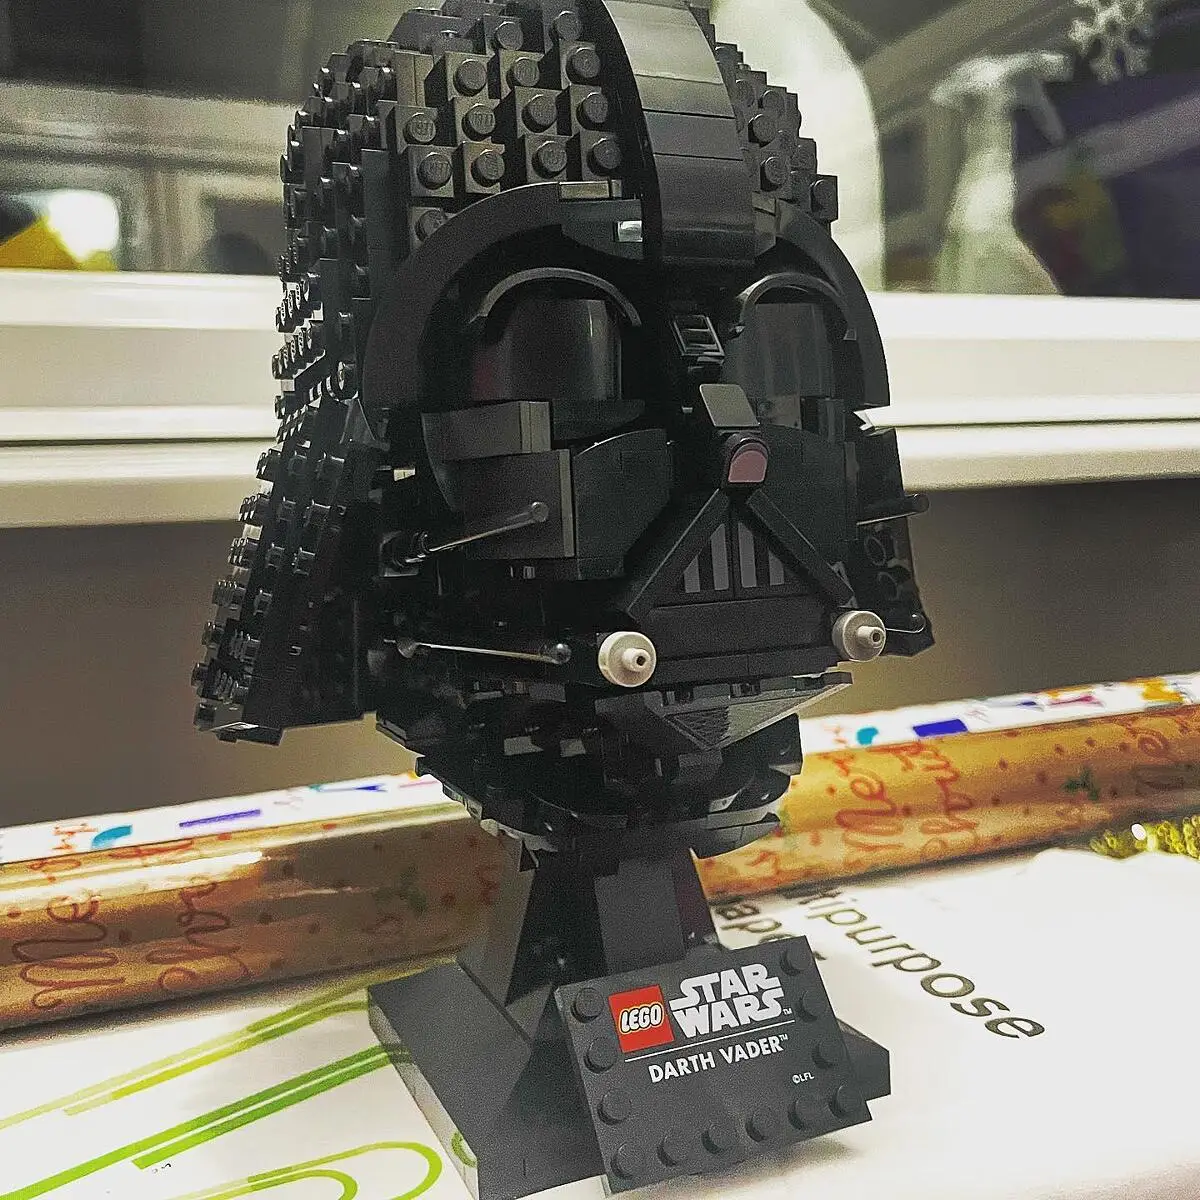 Ce set LEGO en promo à l'effigie du casque de Dark Vador va ravir